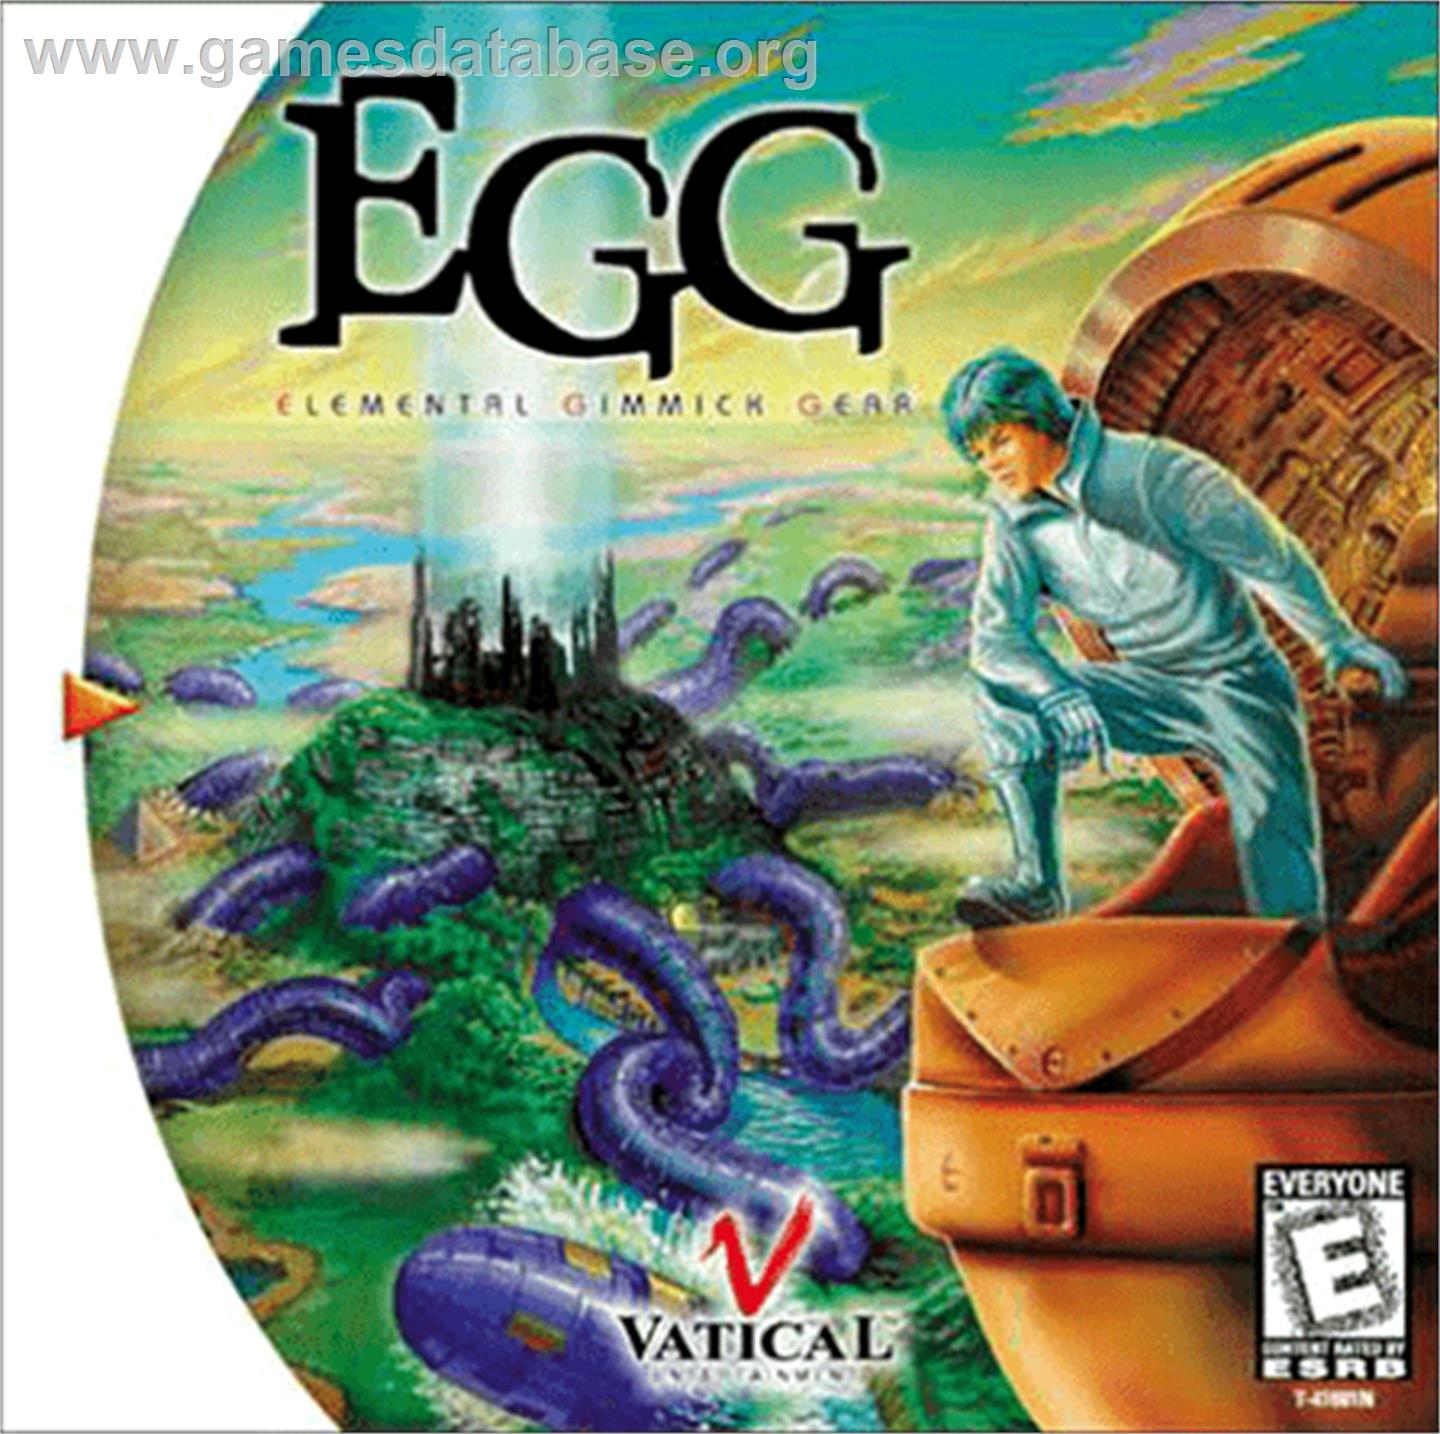 EGG: Elemental Gimmick Gear - Sega Dreamcast - Artwork - Box